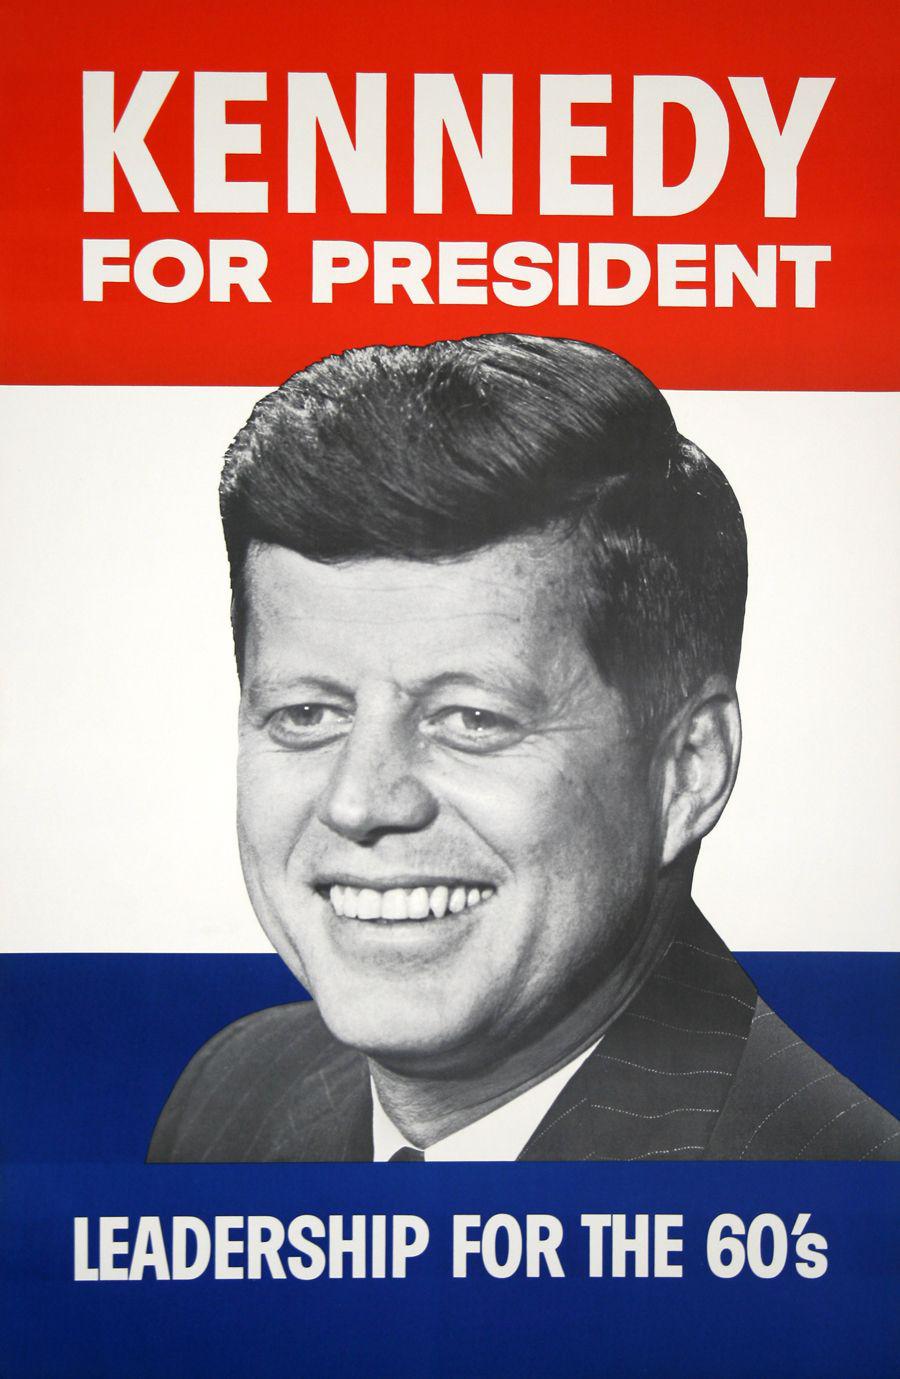 Kennedy for President Original Vintage Campaign Poster 1960 JFK